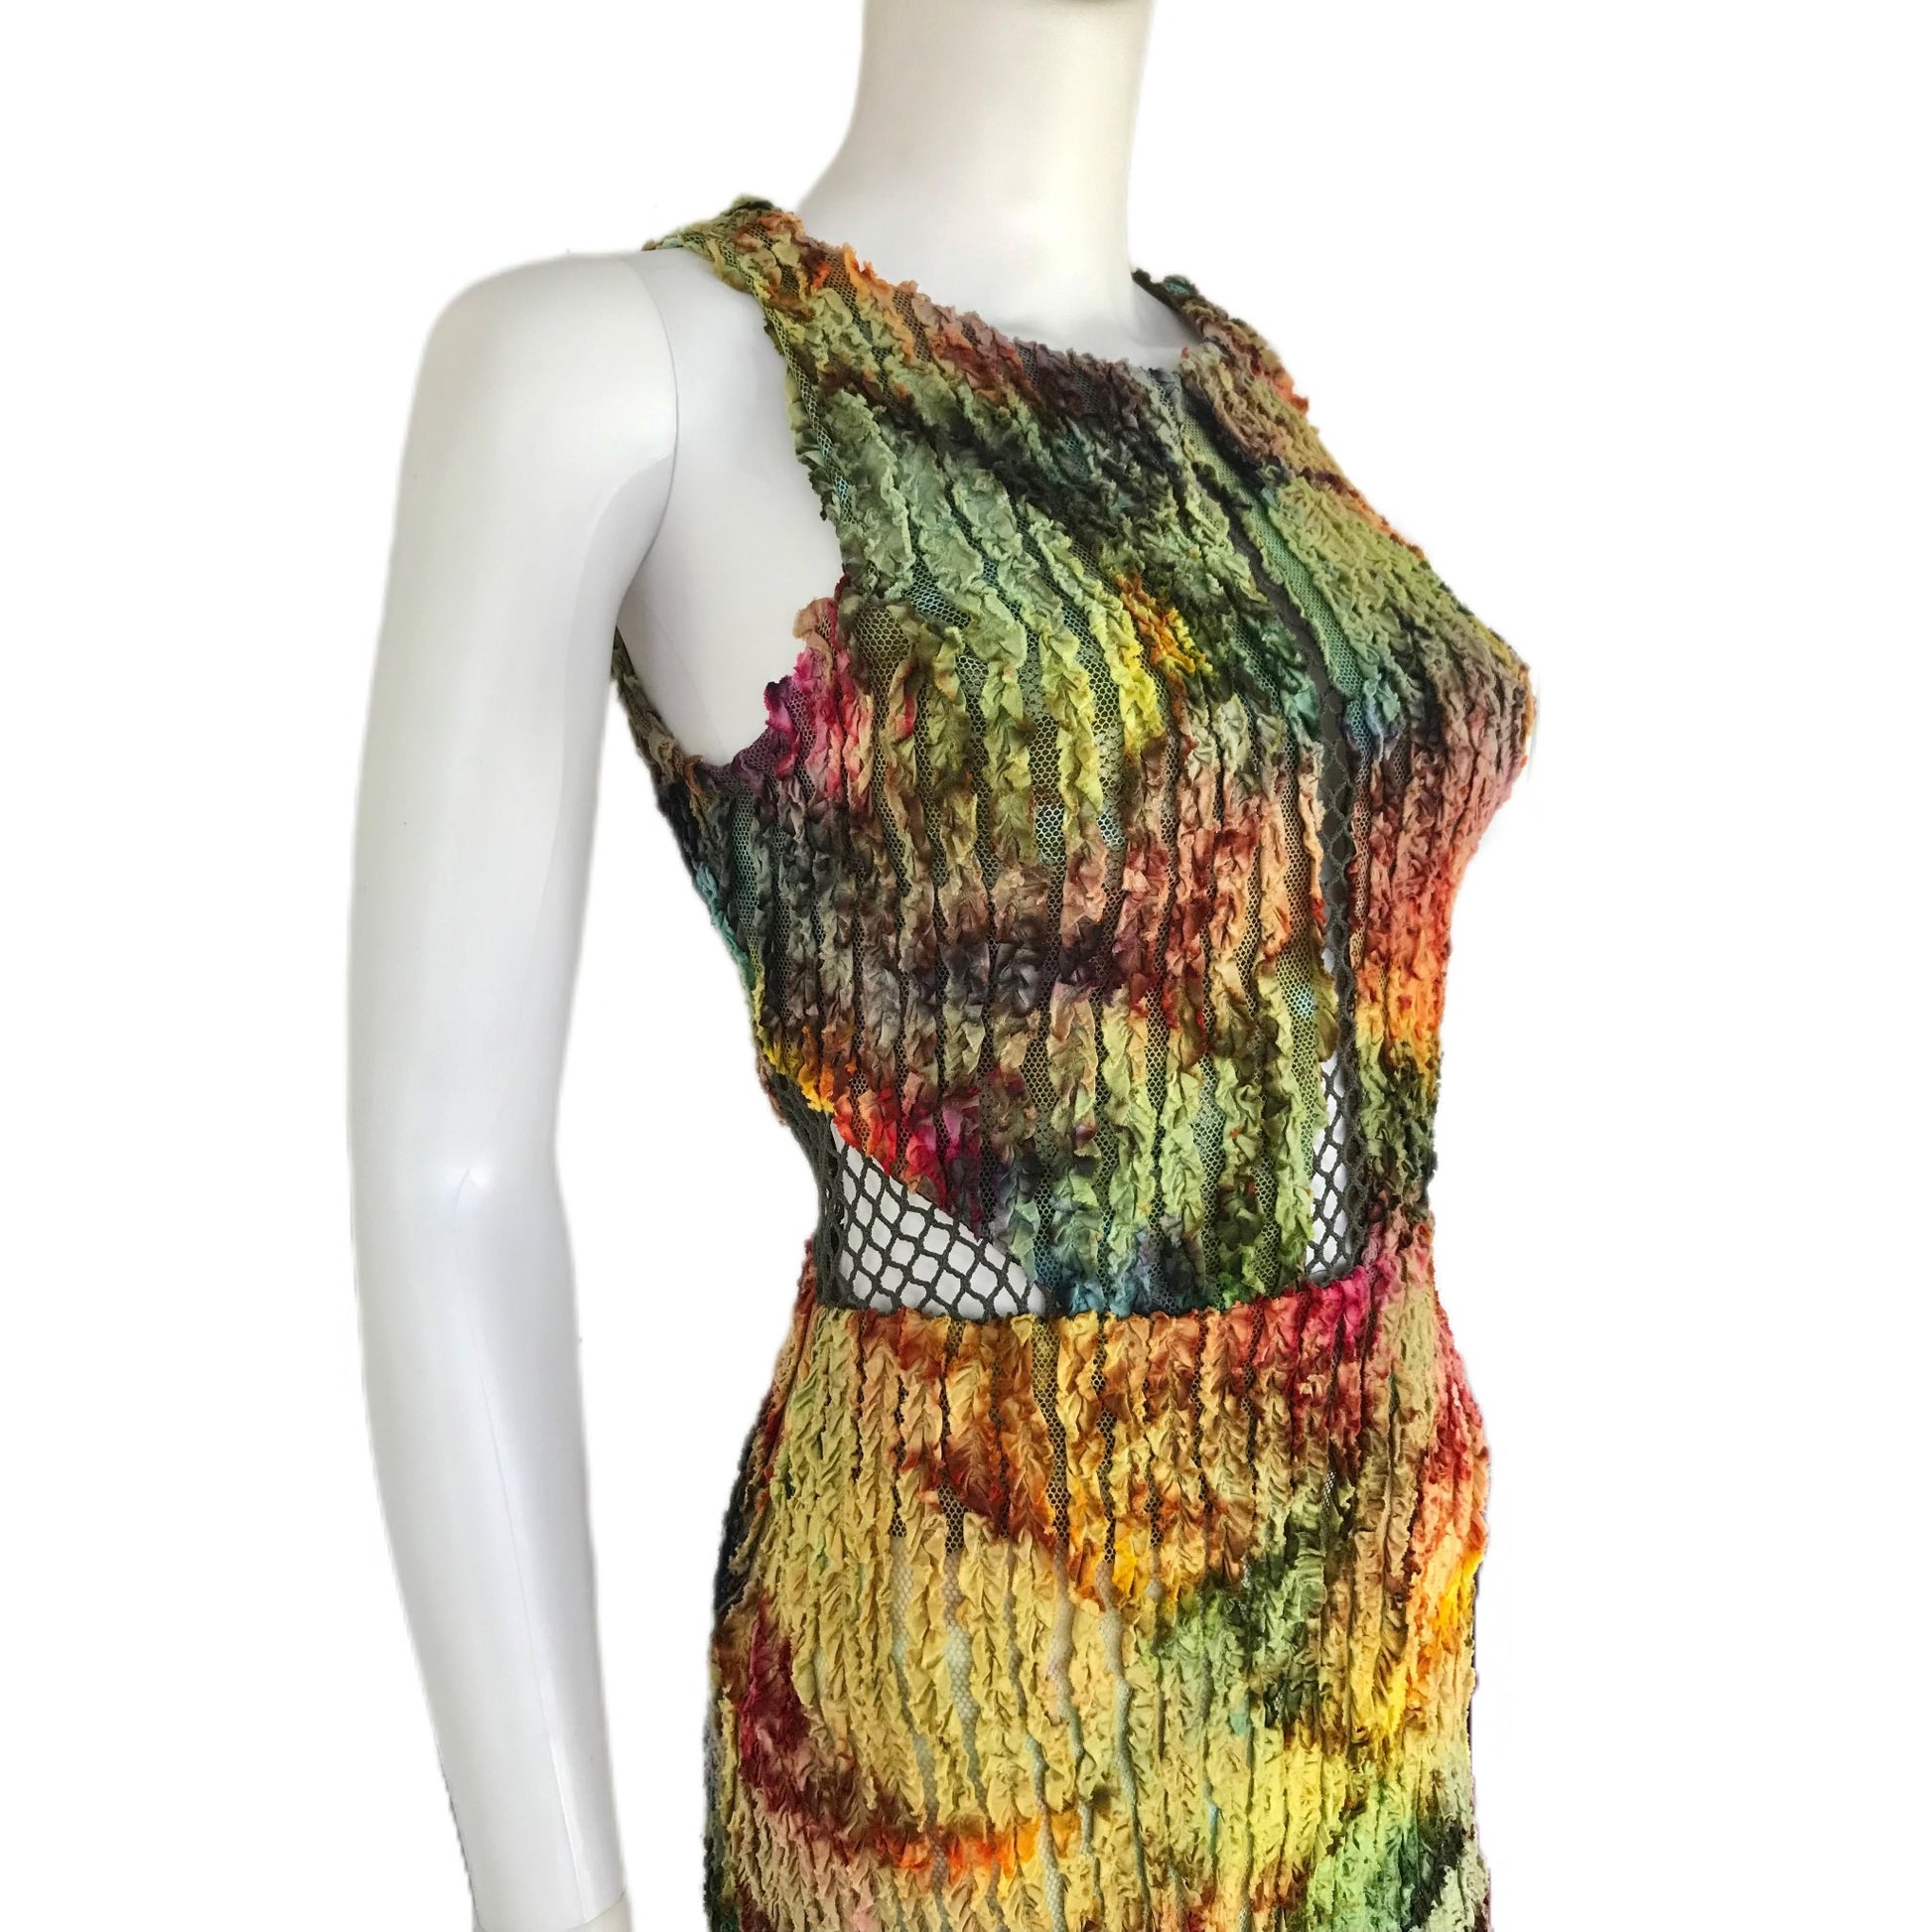 The Rosalee Island Dress- Women's Knit Dress - Size Small